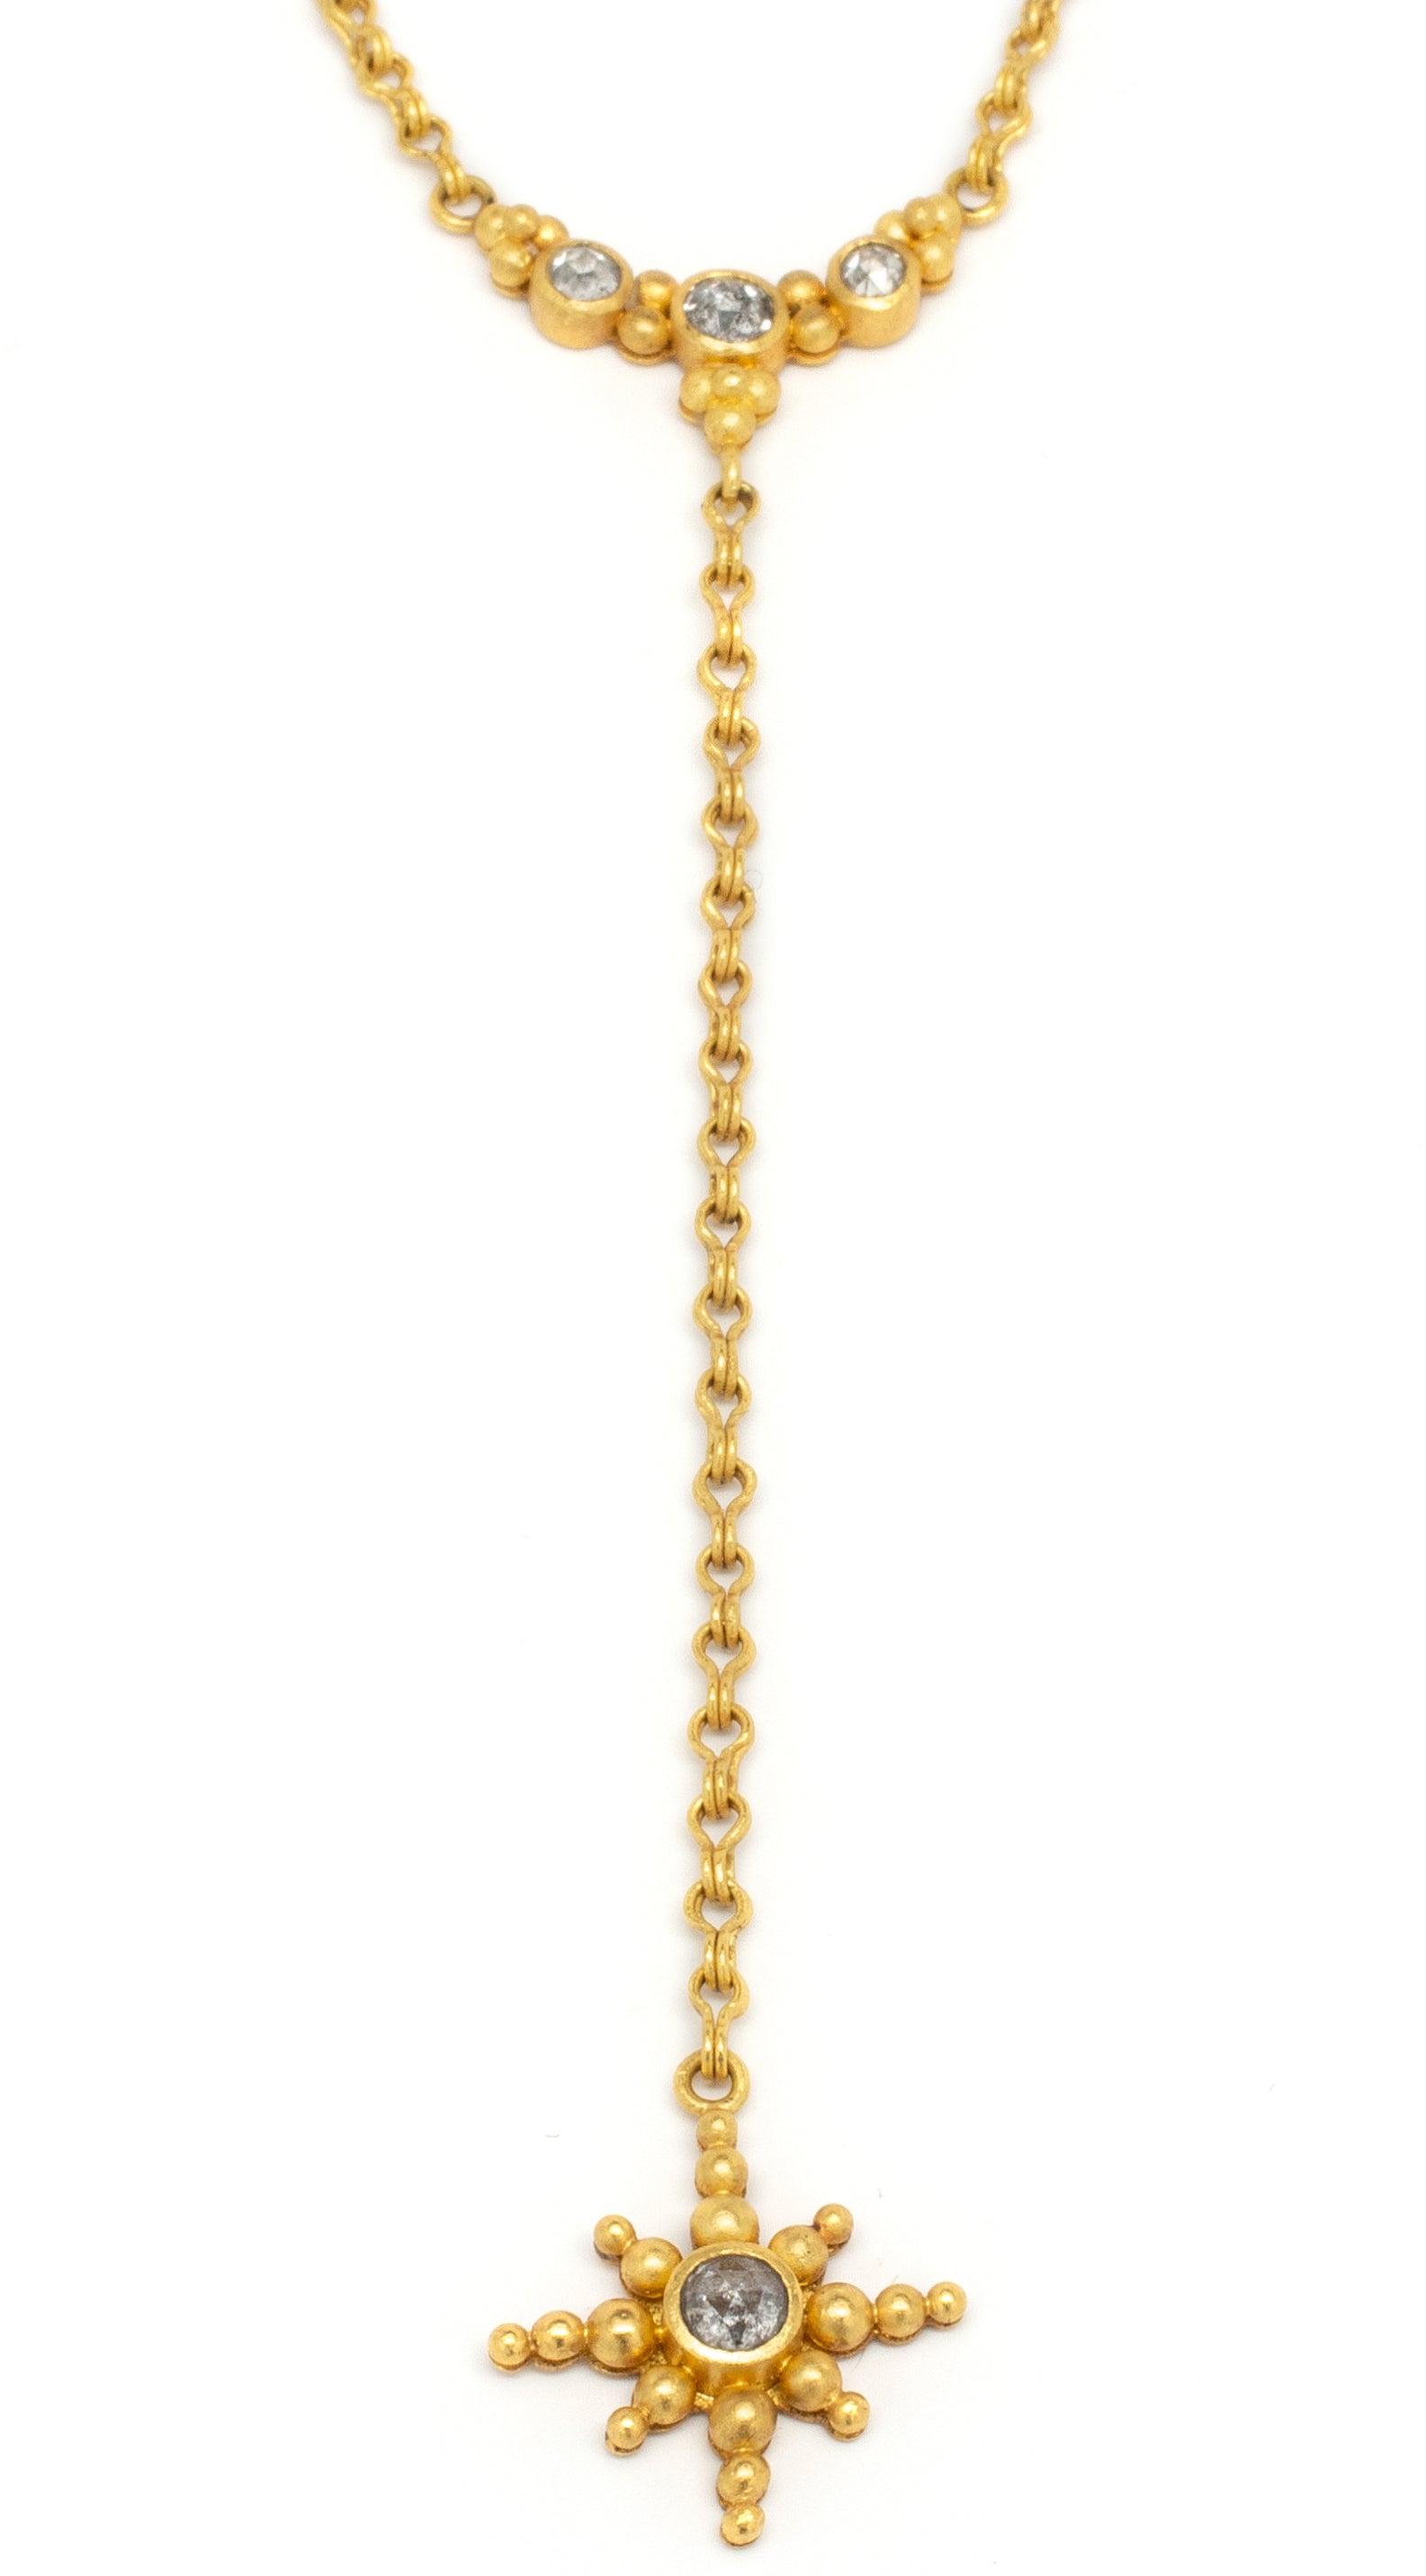 Linda HOJ 22 Karat Diamond Star Necklace